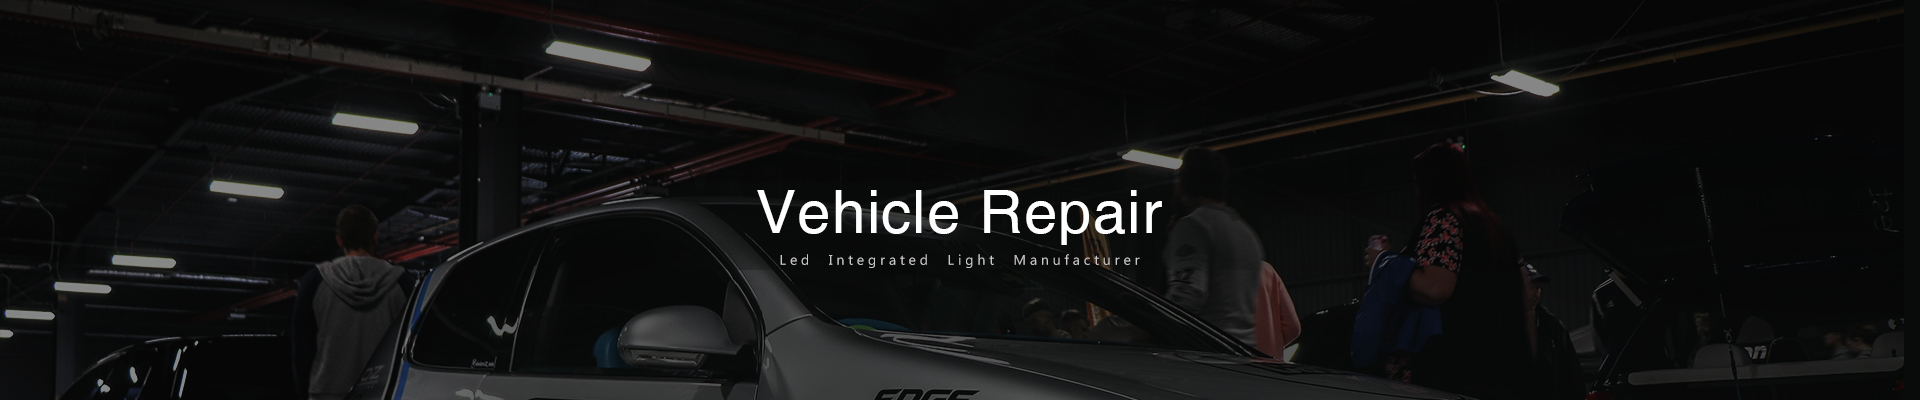 Vehicle Repair